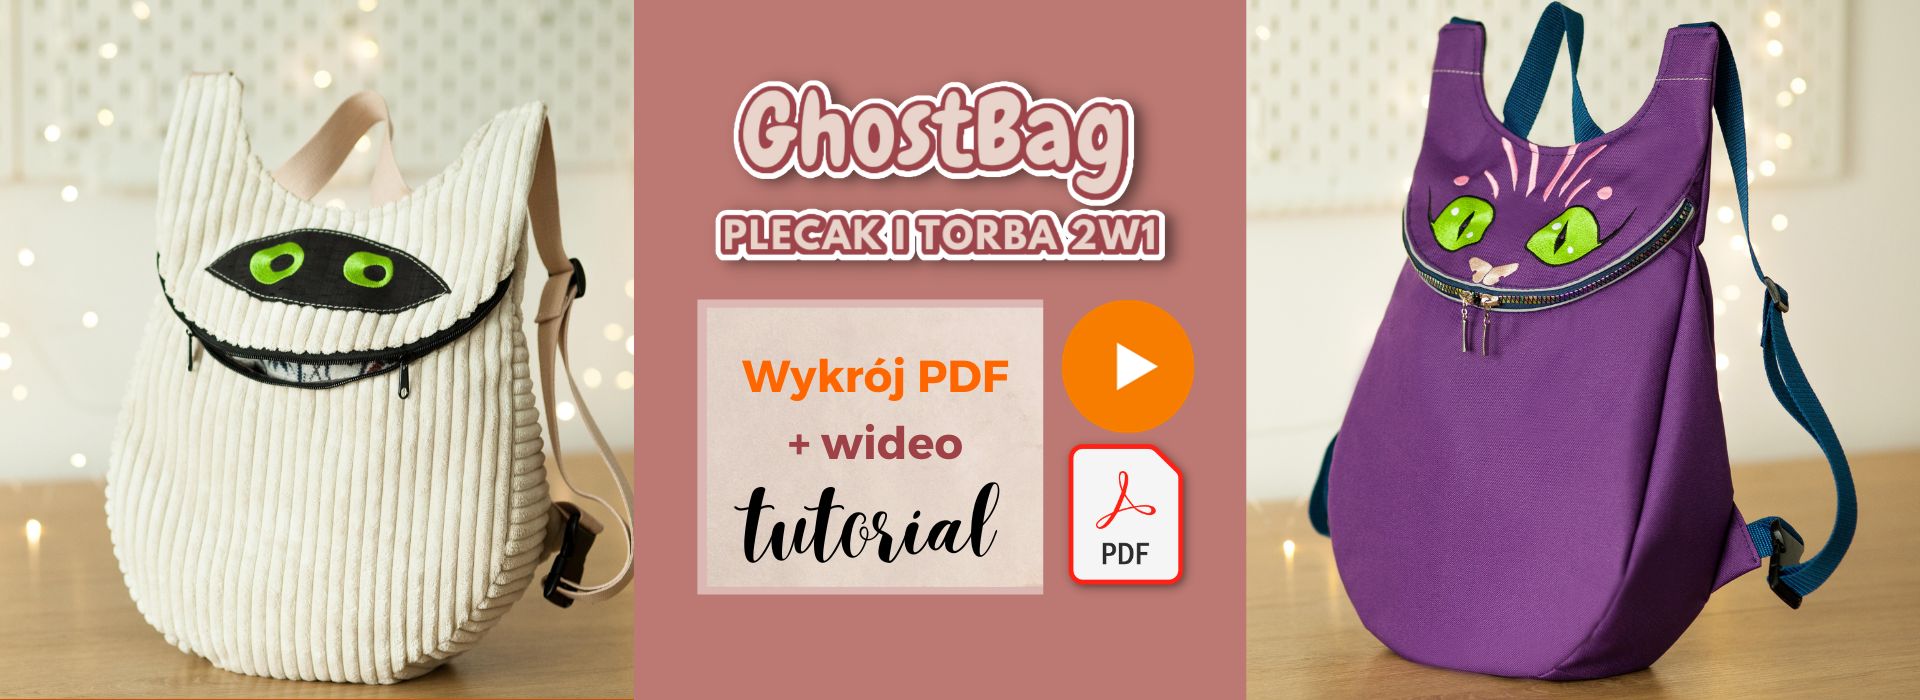 ghostbag ghostbackpack sewing pattern kursy szycia online wykroje PDF tutoriale Kamila Plasun